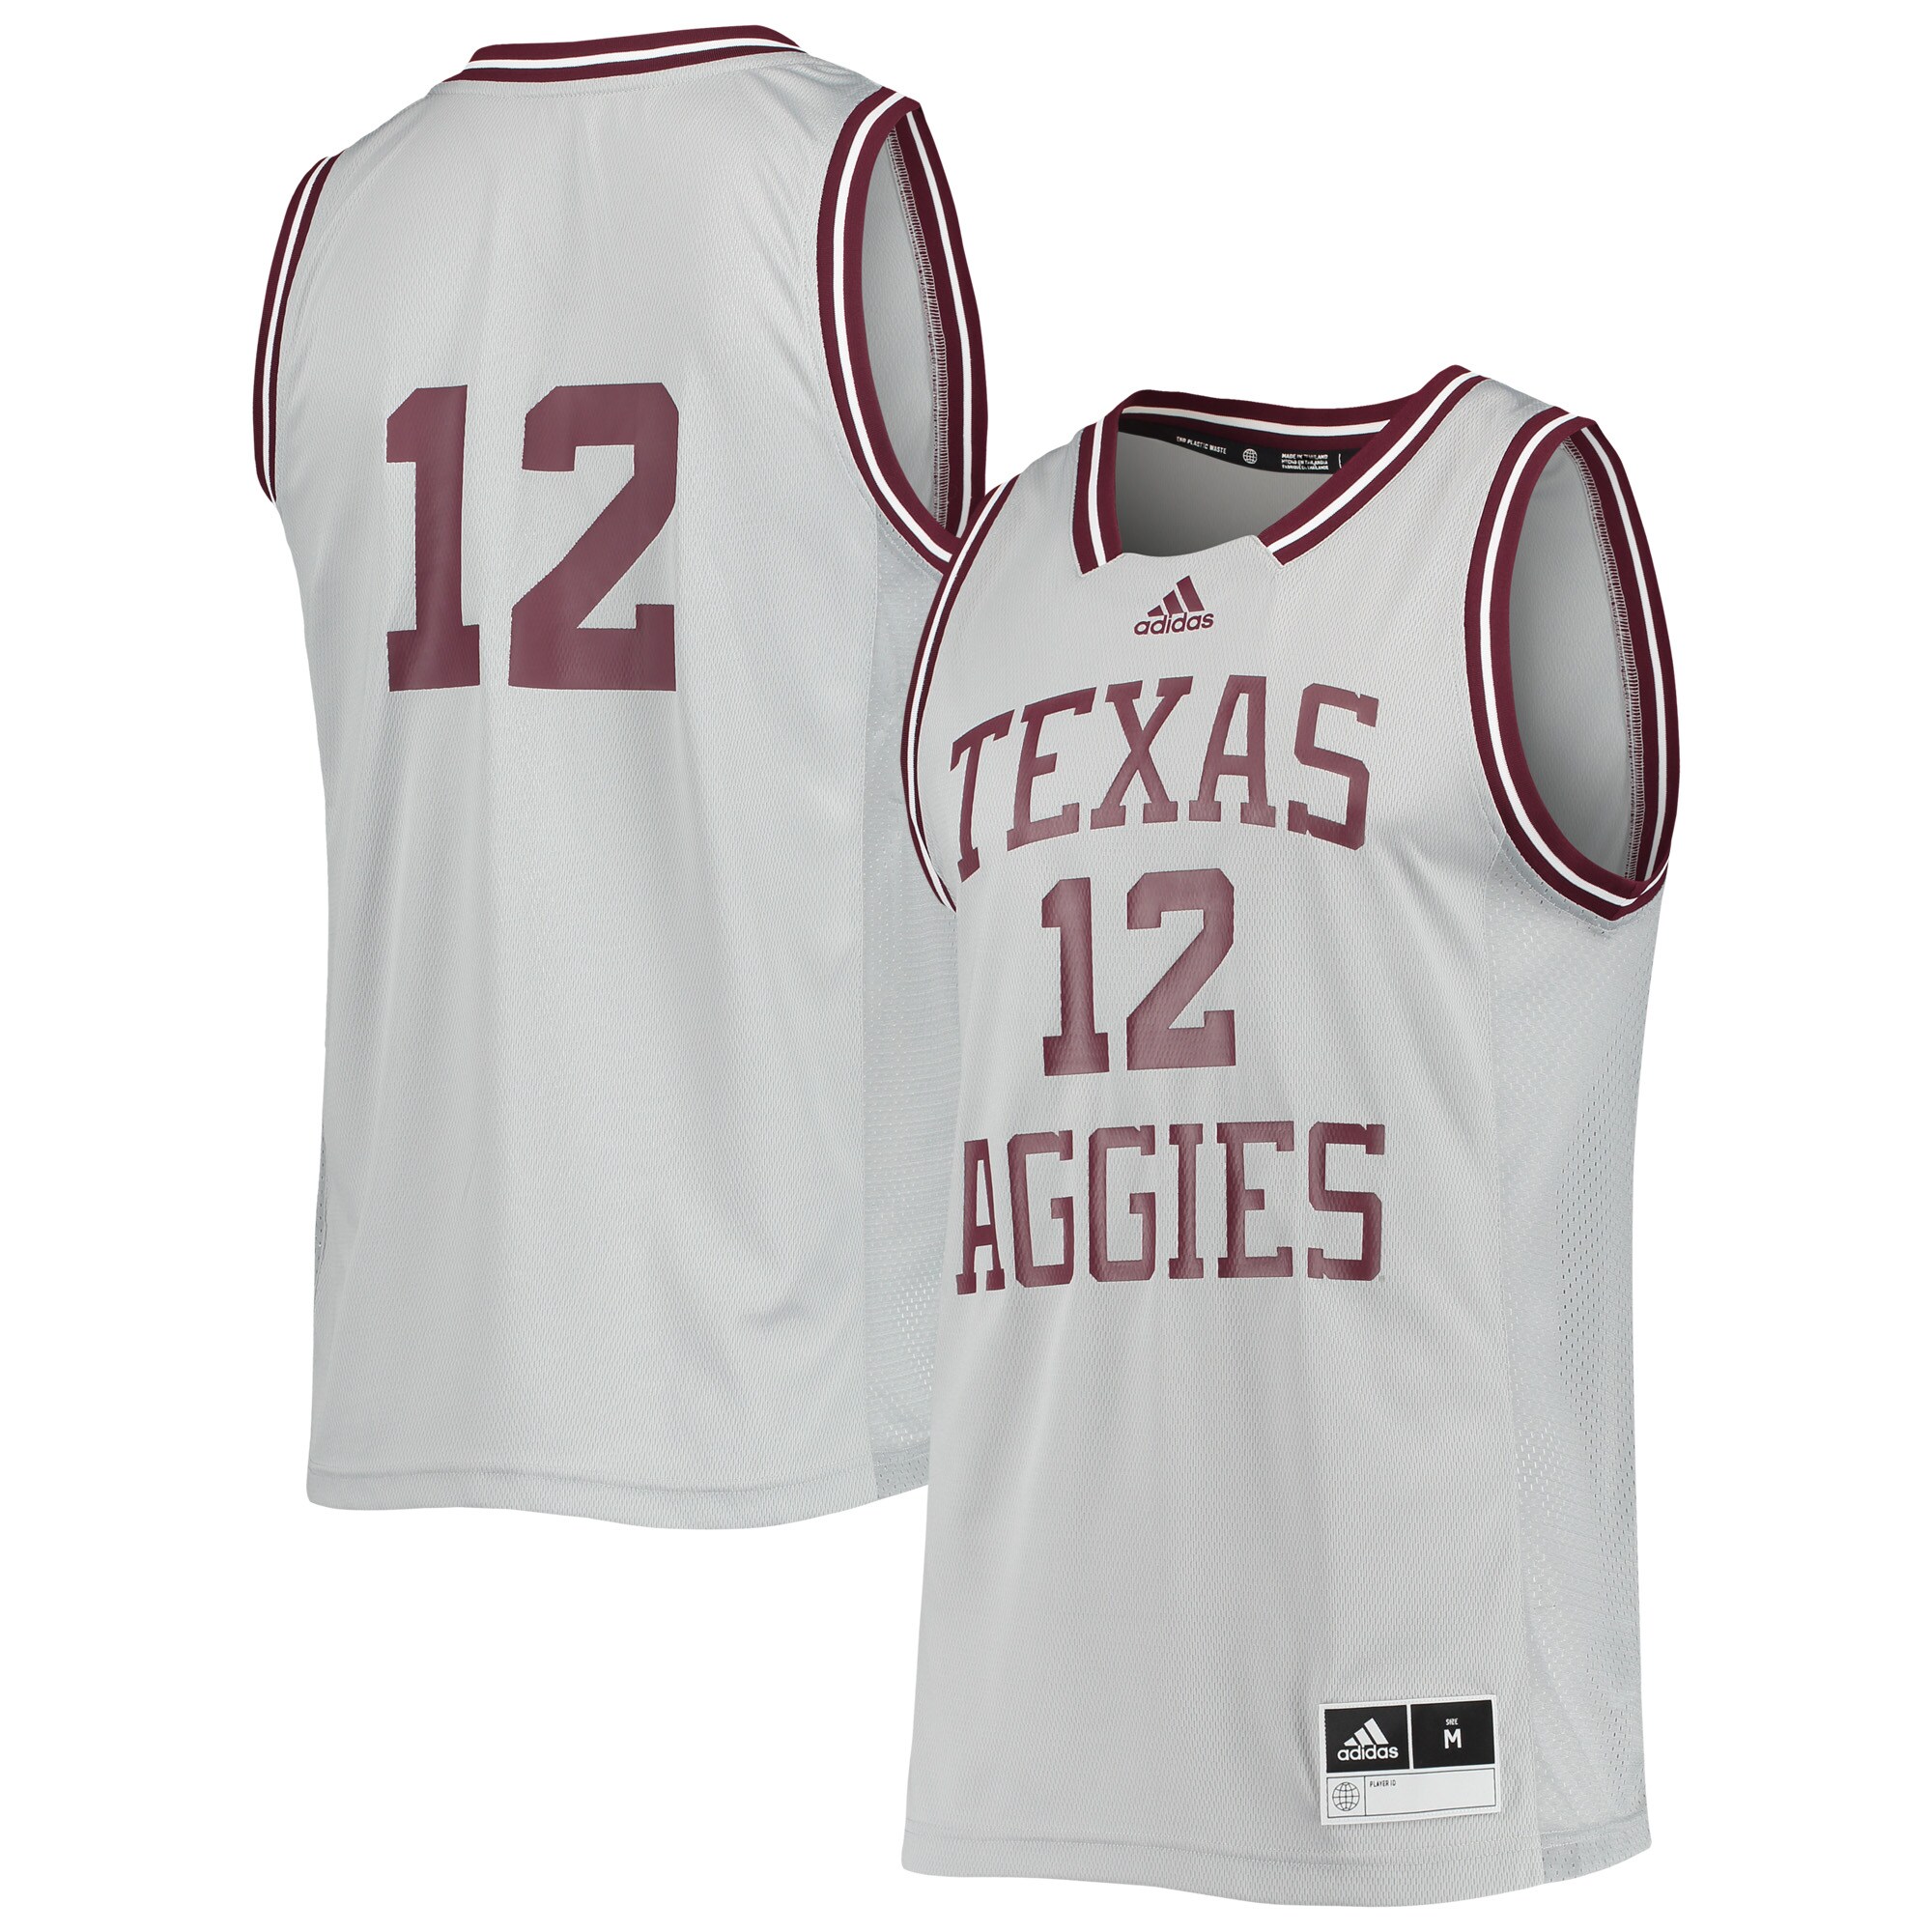 #12 Texas A&M Aggies   Reverse Retro Jersey - Gray For Youth Women Men